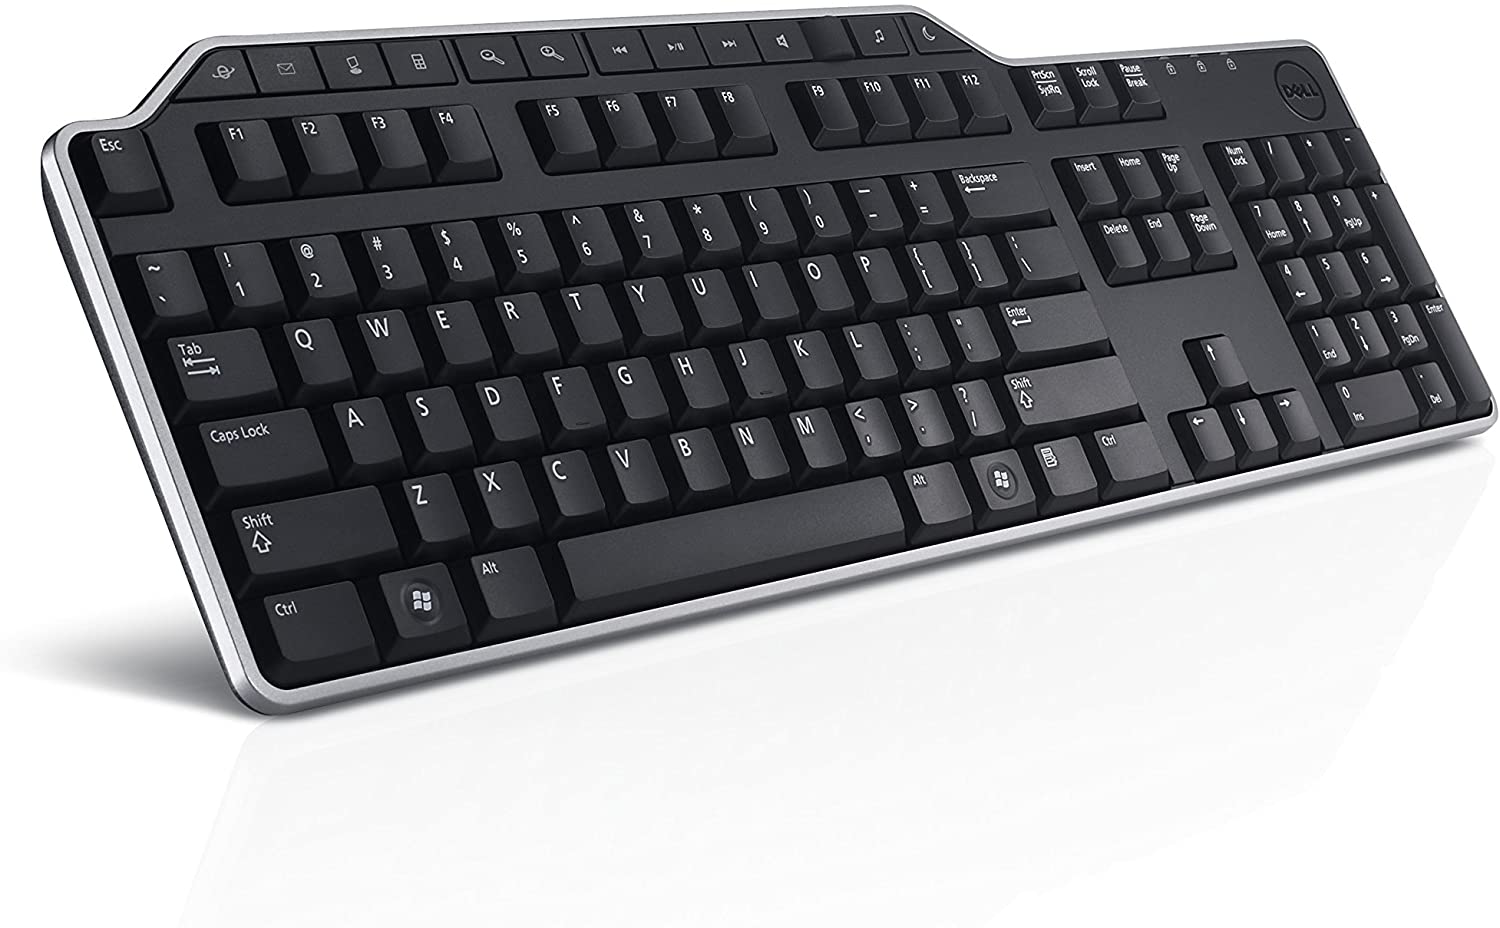 Dell KB522 Multimedia Keyboard